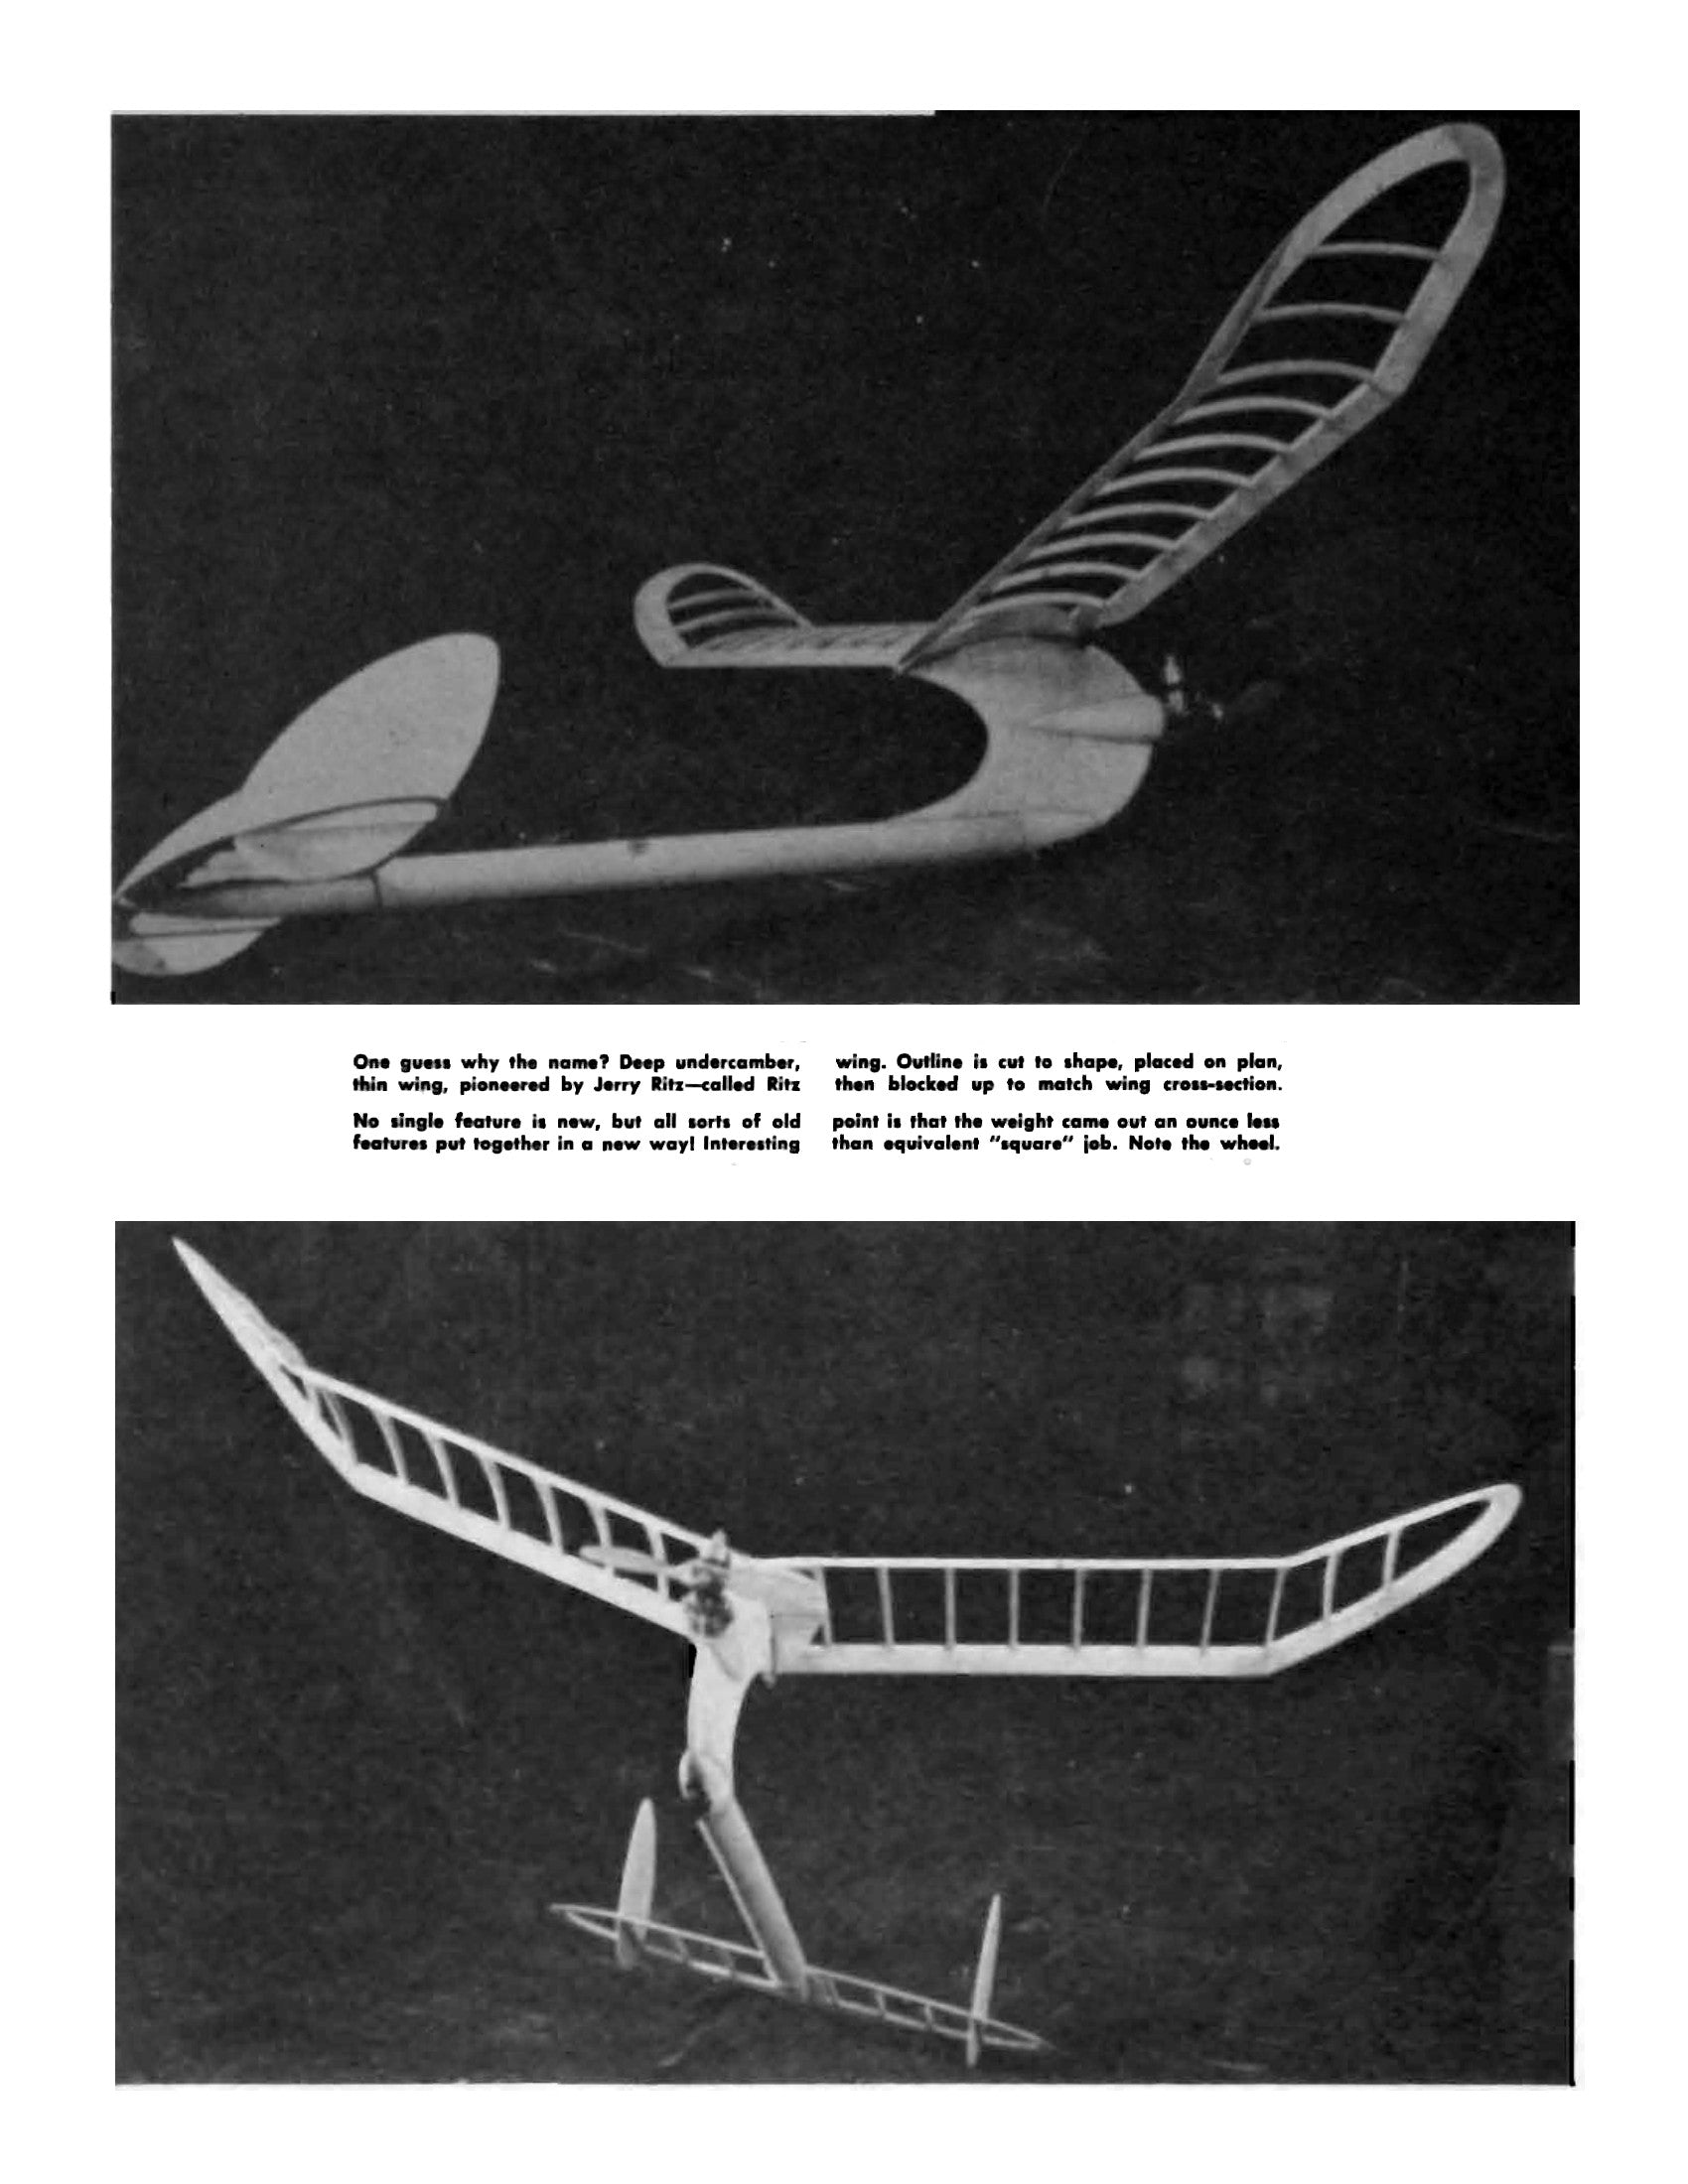 full size printed plan vintage 1959 free flight  wingspan 34”   engine .049 the hook